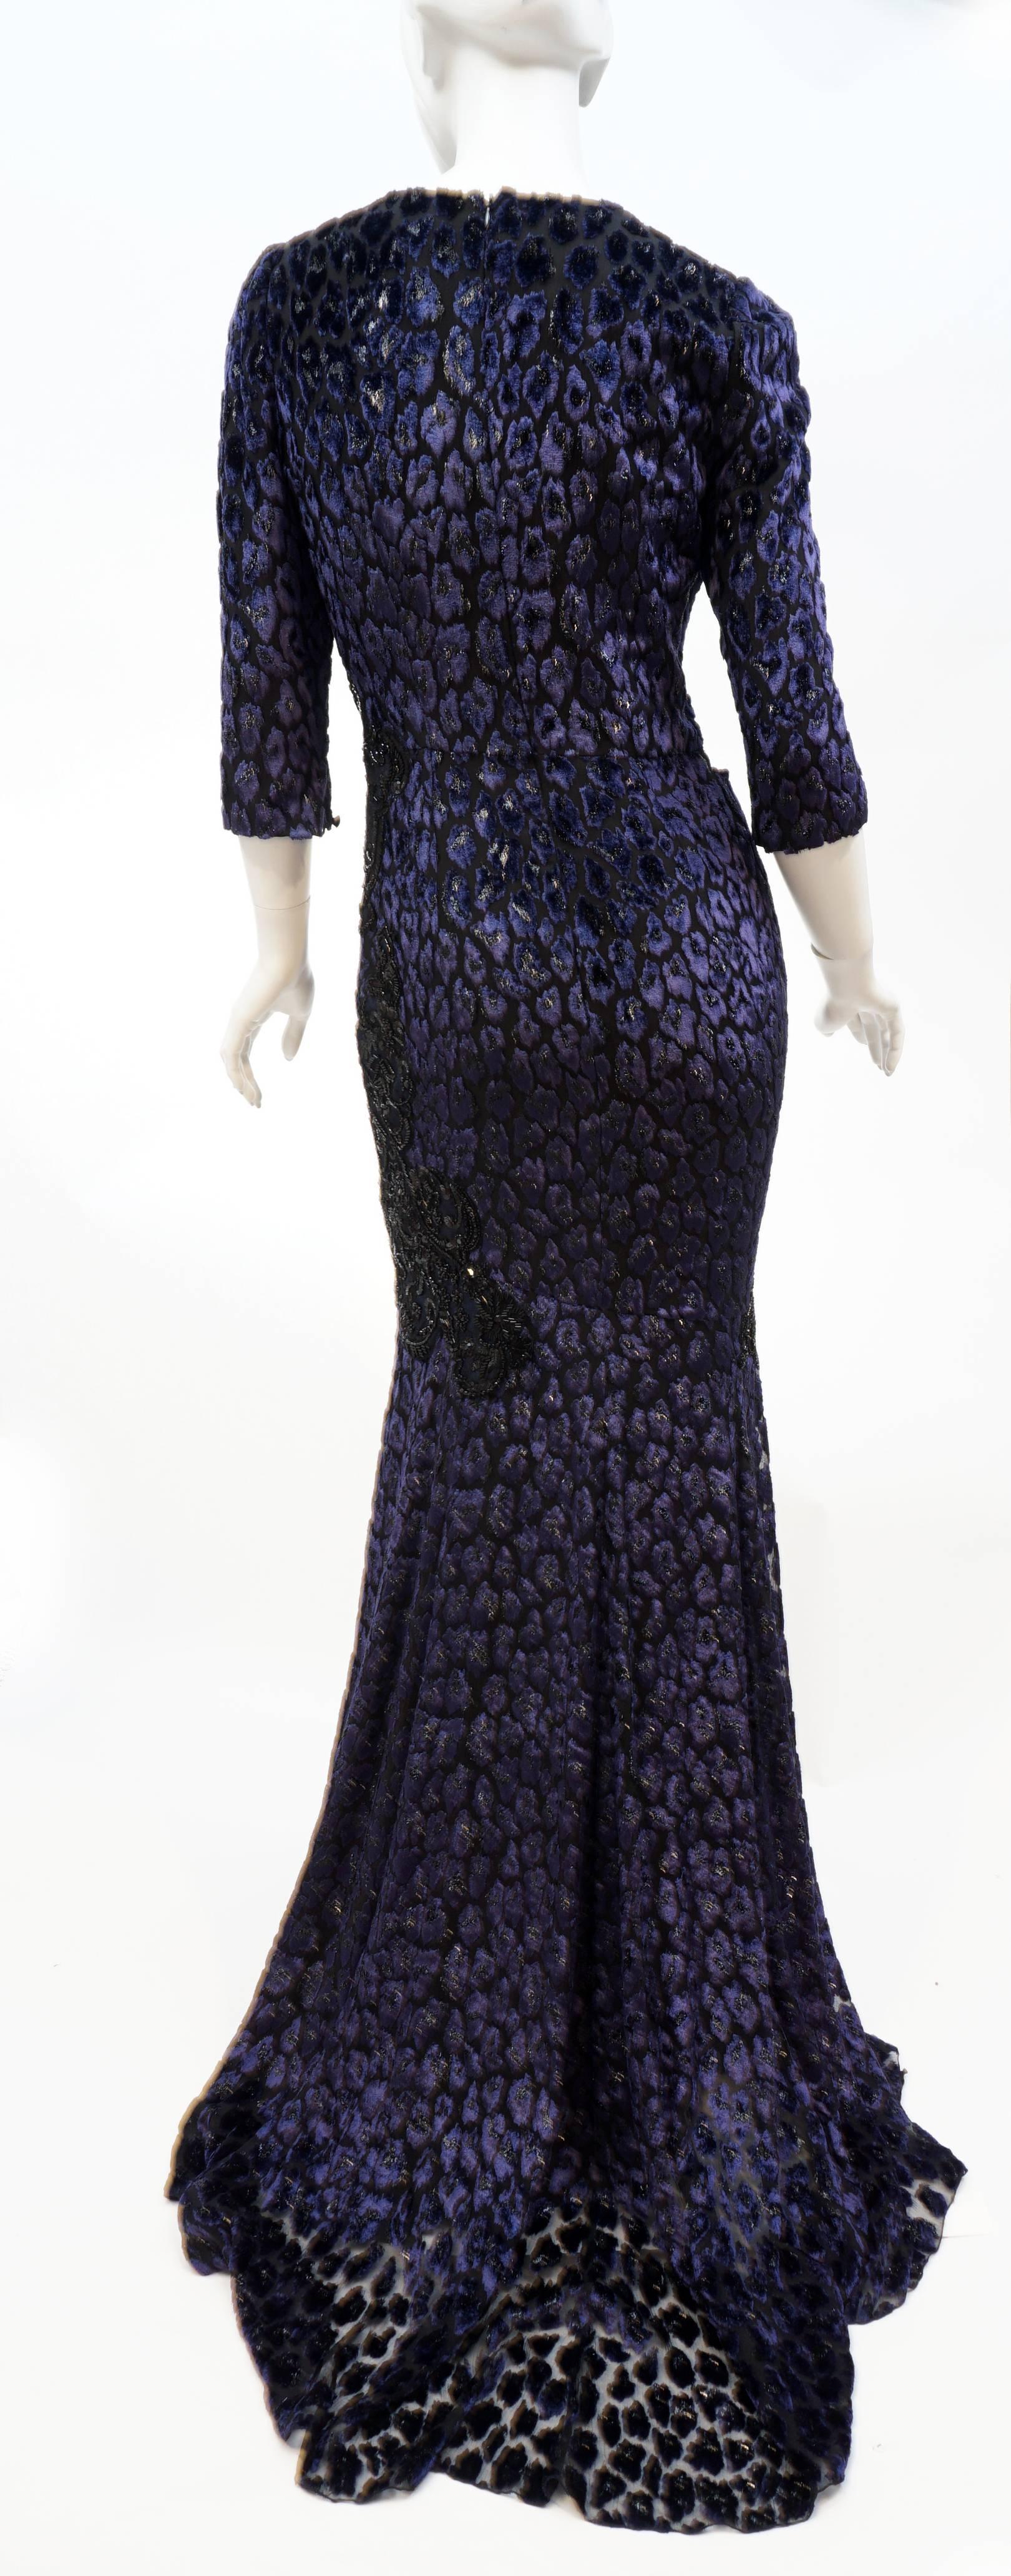 Andrew Gn embellished midnight blue leopard print devore velvet dress Fr 38 - 6 In Excellent Condition In Montgomery, TX